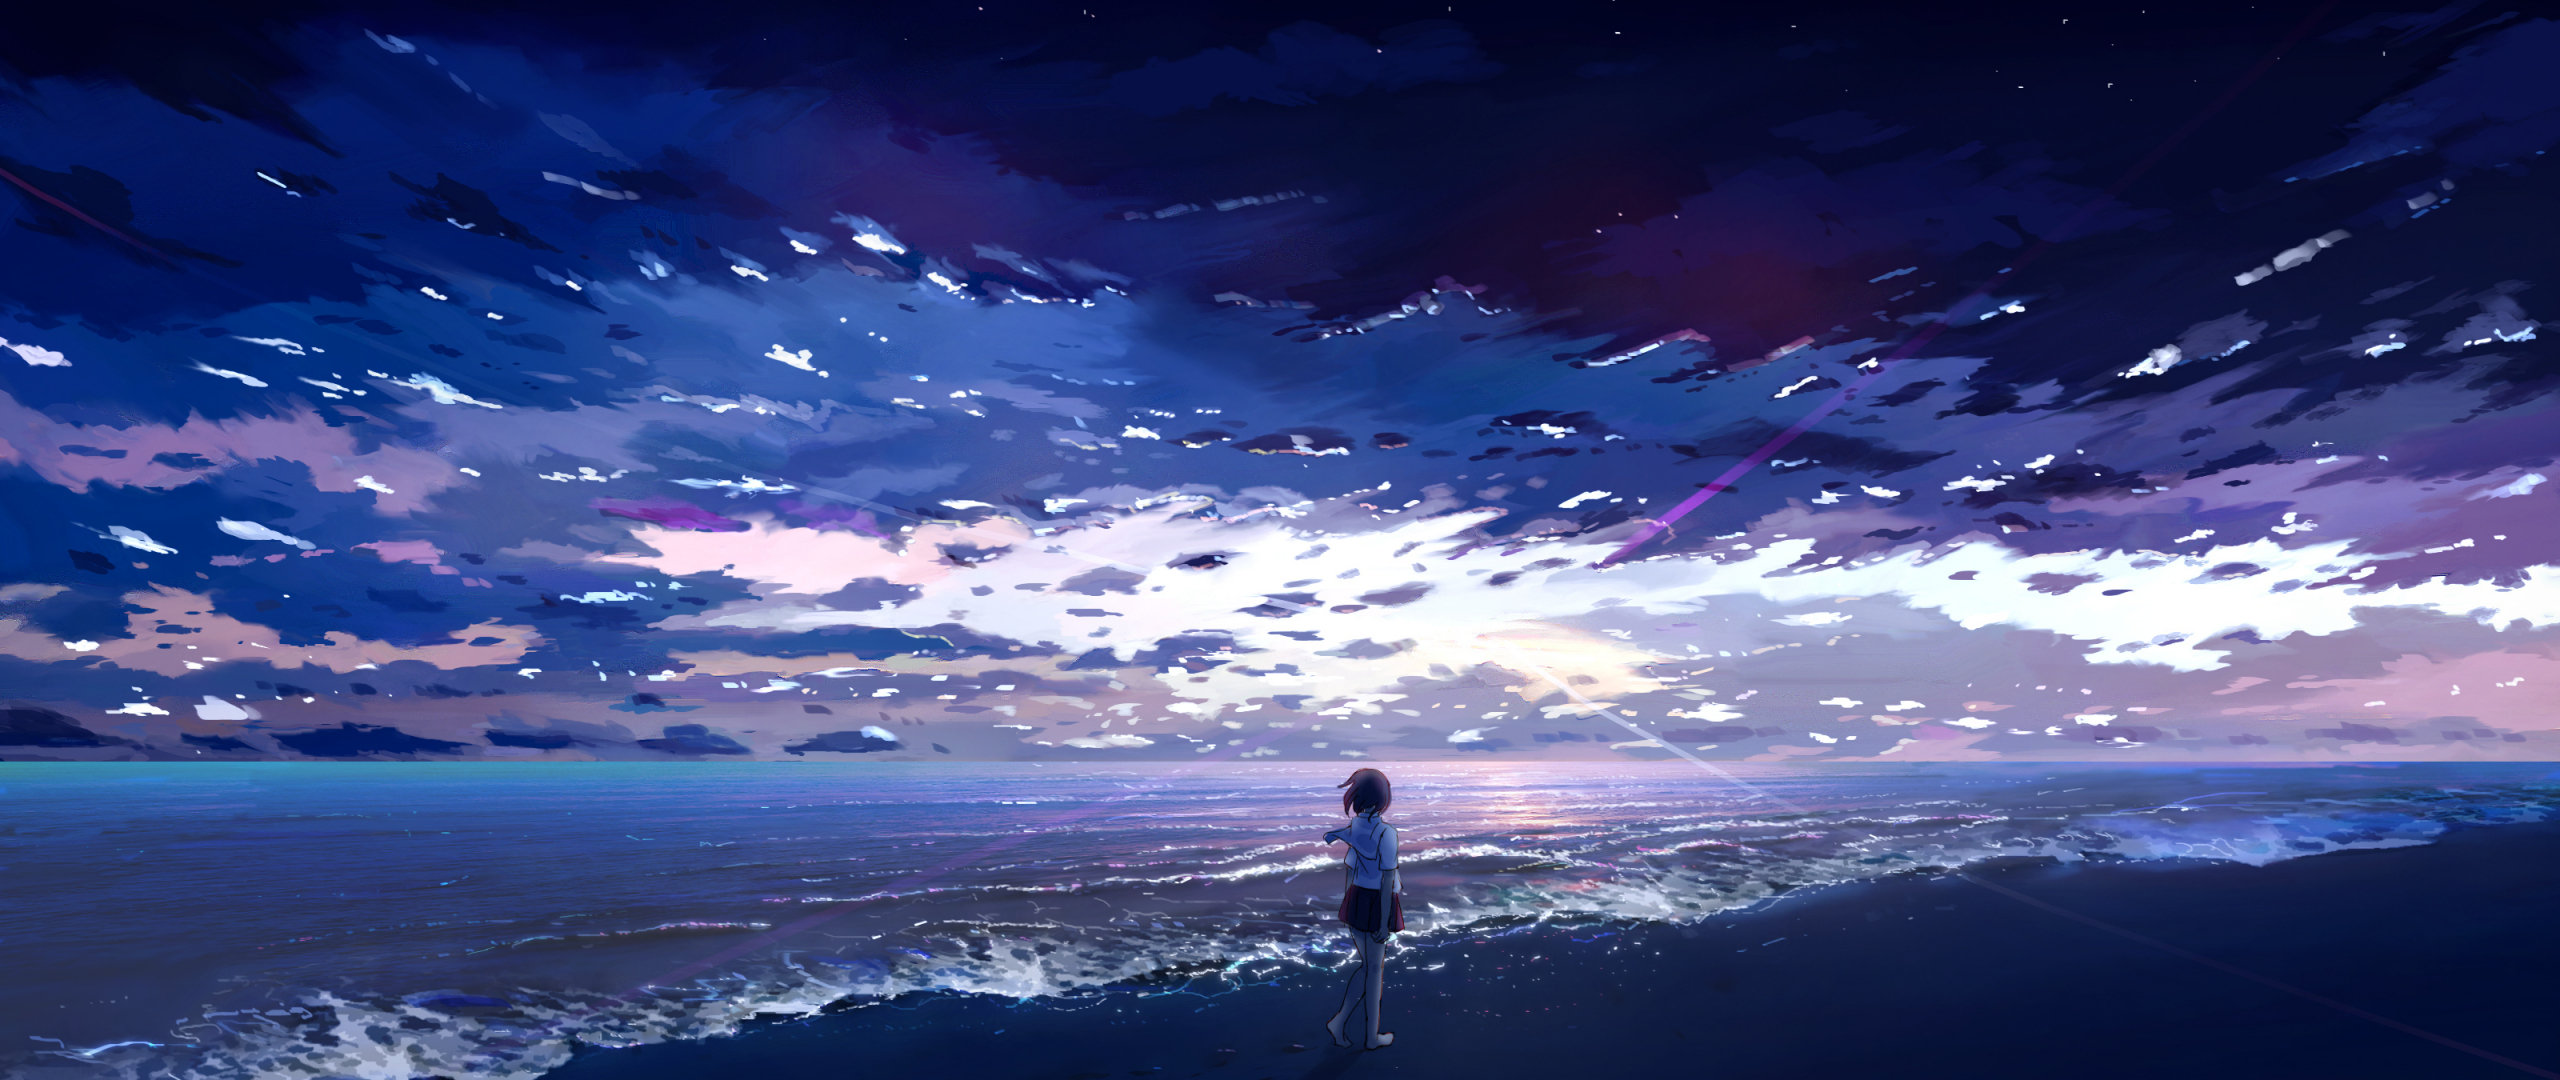 Download Anime Girl Seashore Beach Art 2560x1080 Wallpaper Dual Wide 2560x1080 Hd Image Background